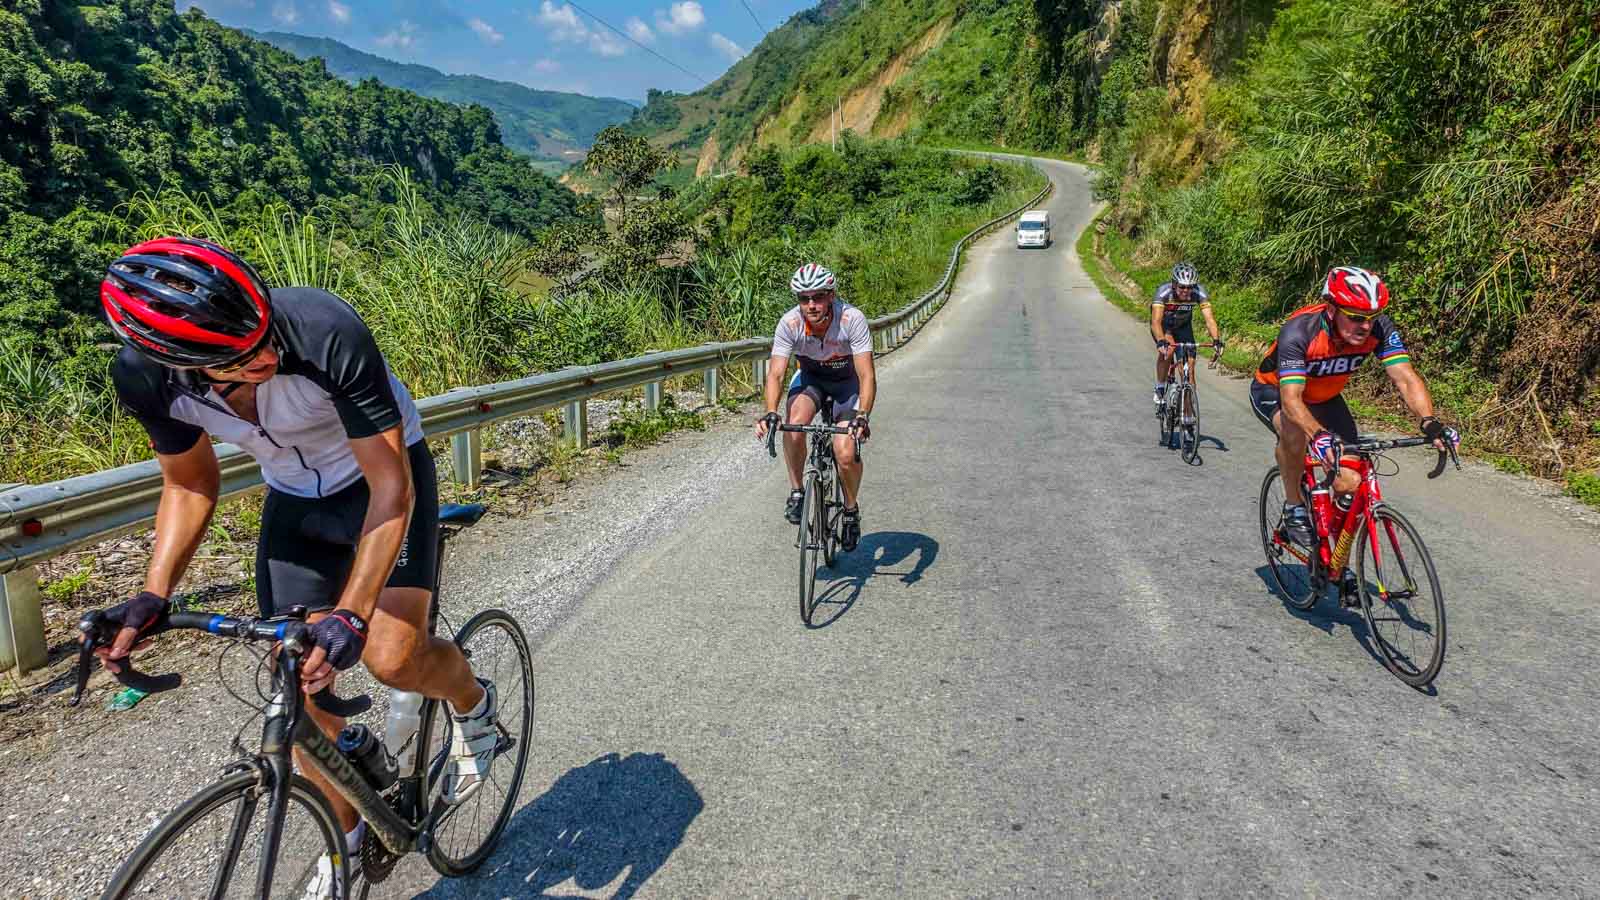 Cycling Tour through mountains in Vietnam